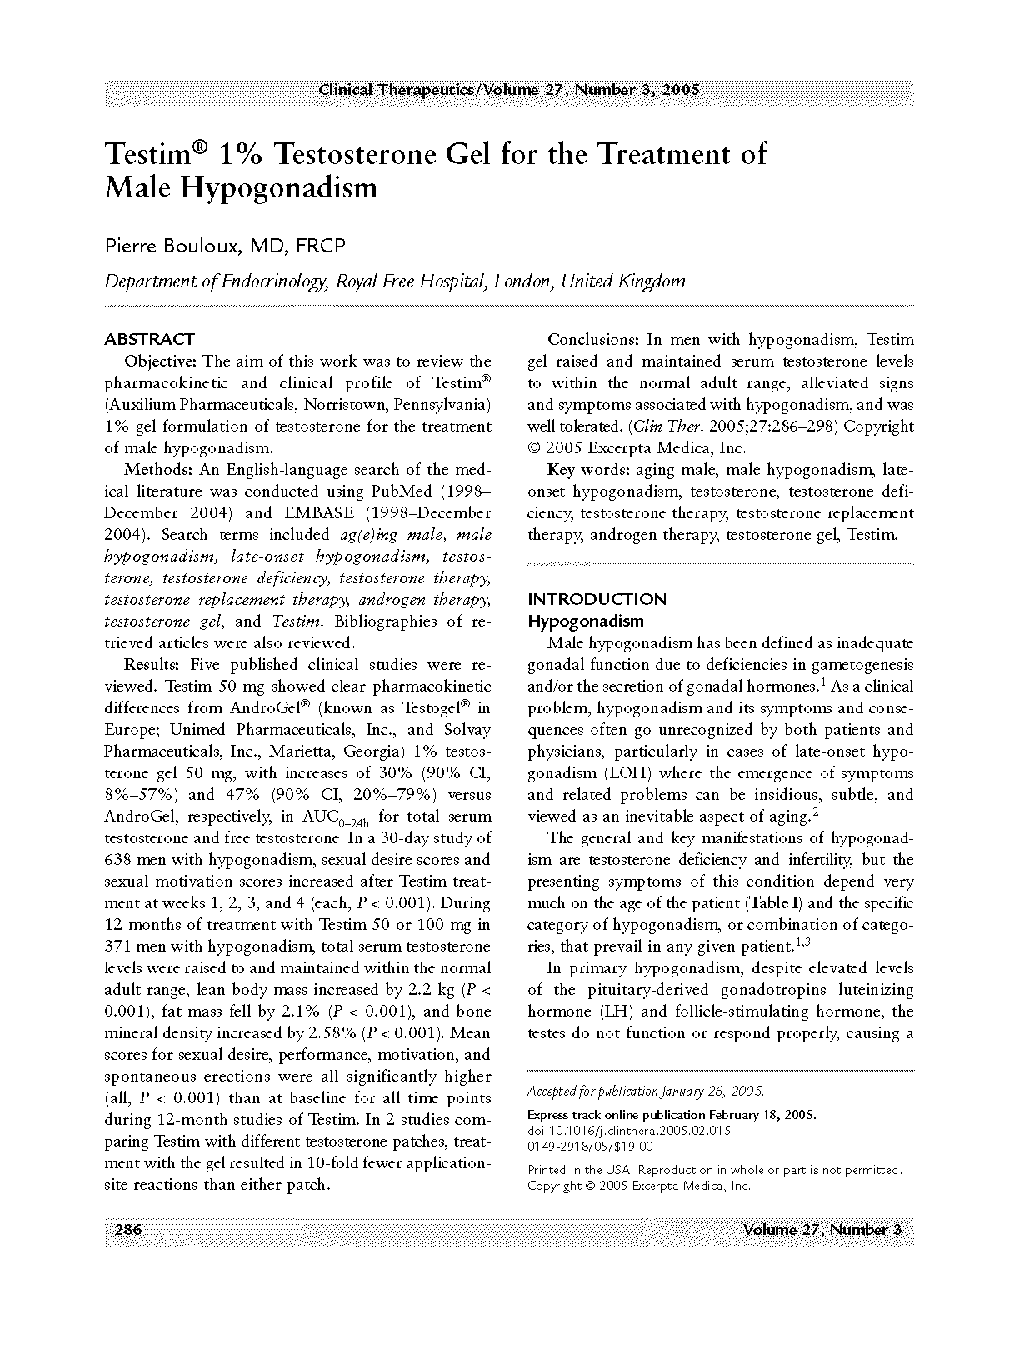 Testim® 1% testosterone gel for the treatment of male hypogonadism